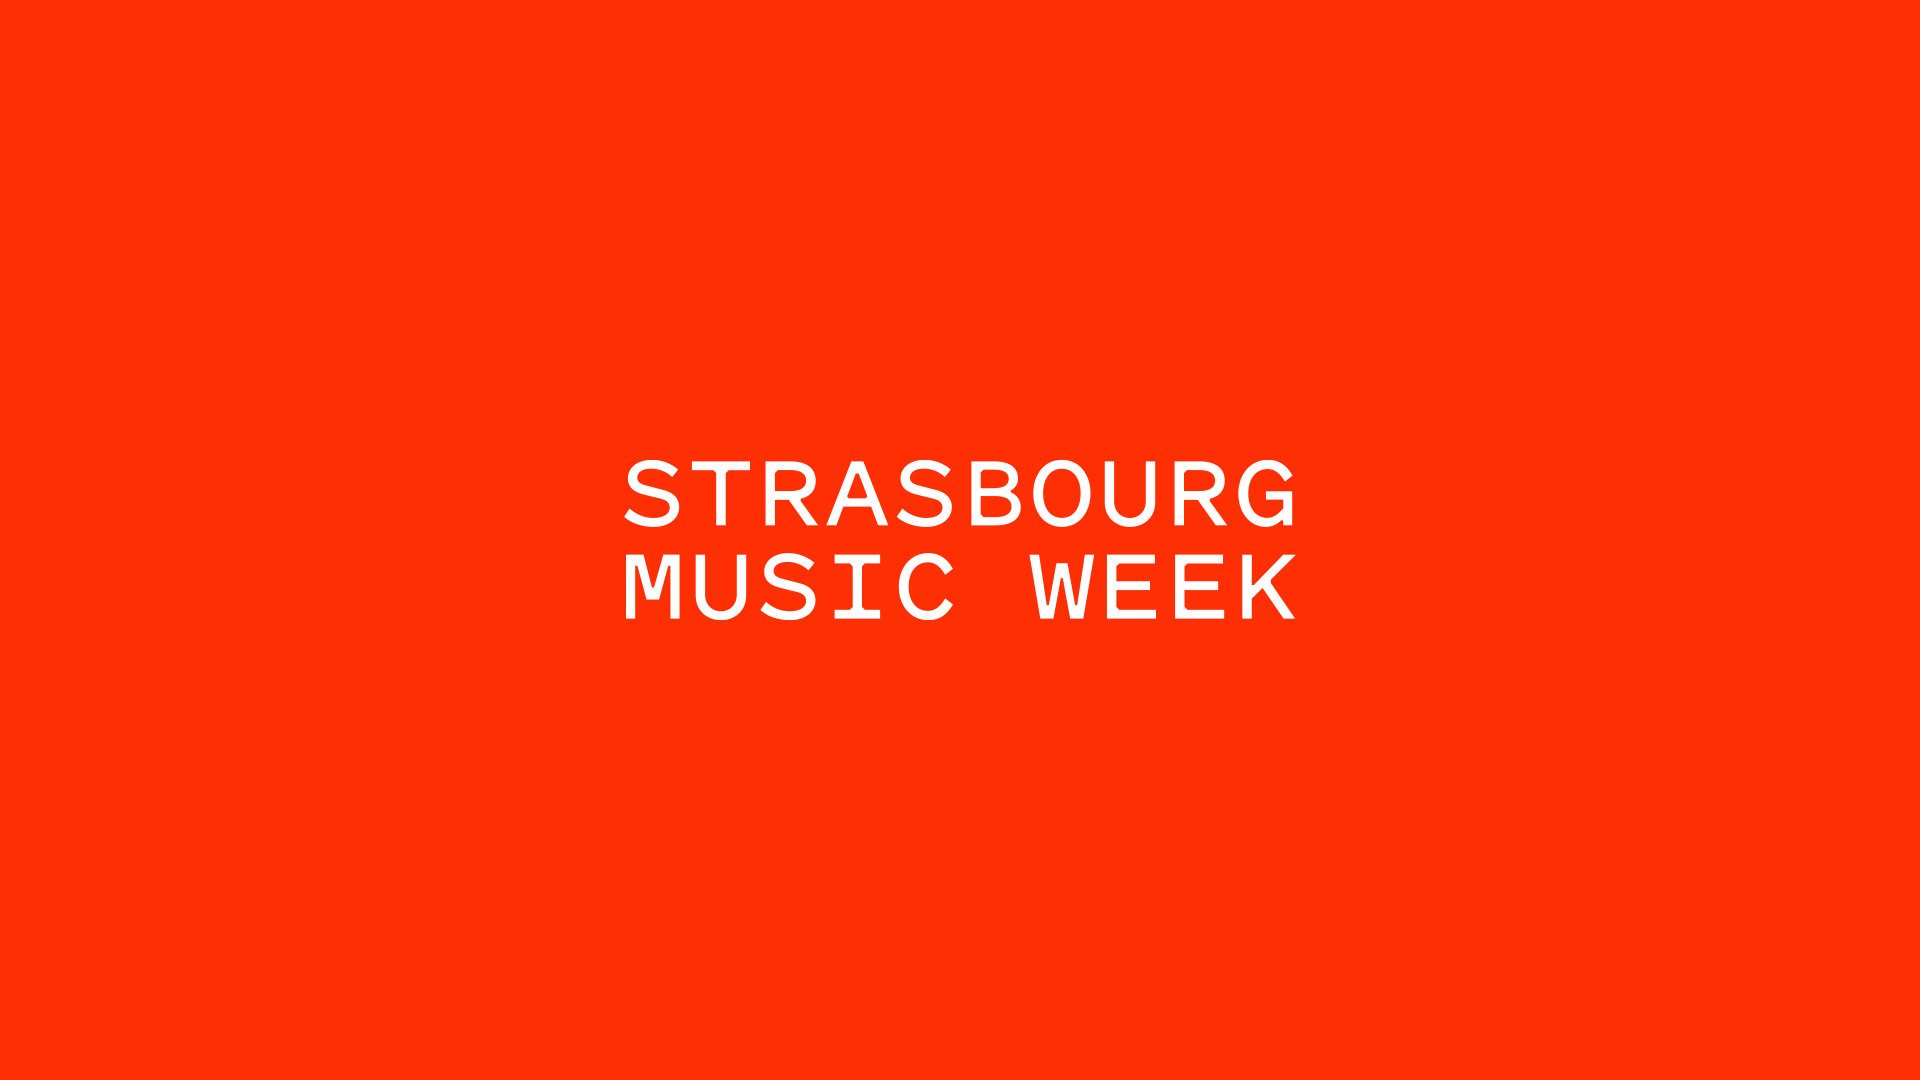 Strasbourg music week